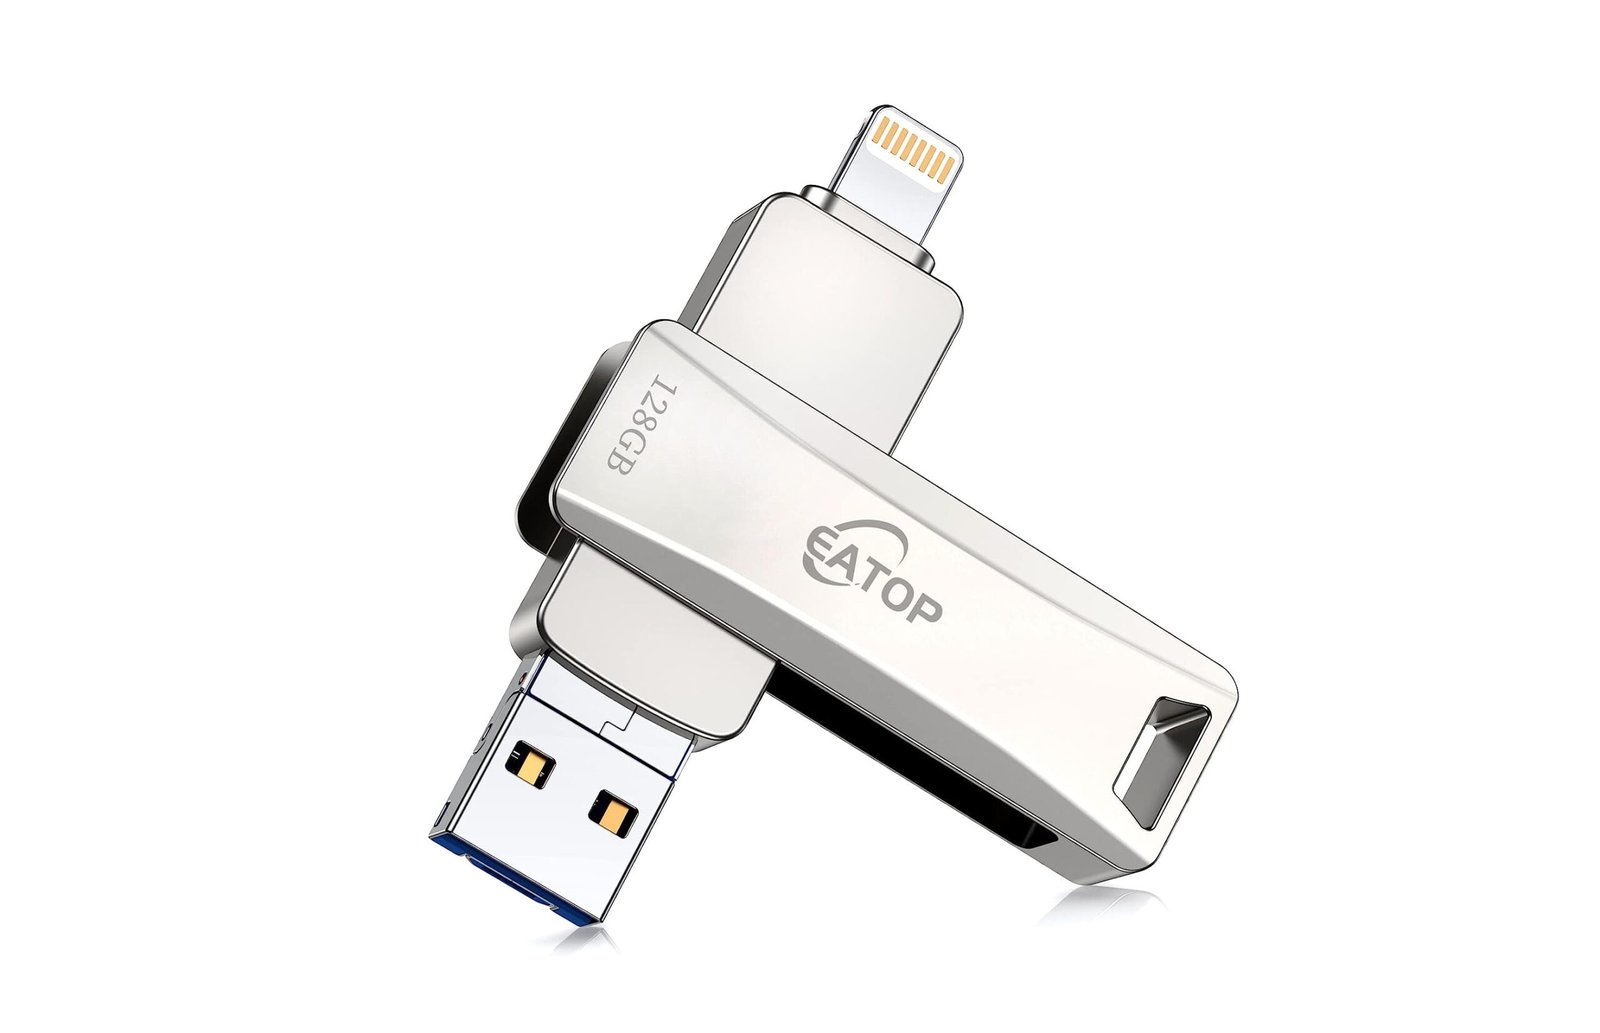 EATOP 128GB iPhone Flash Drive